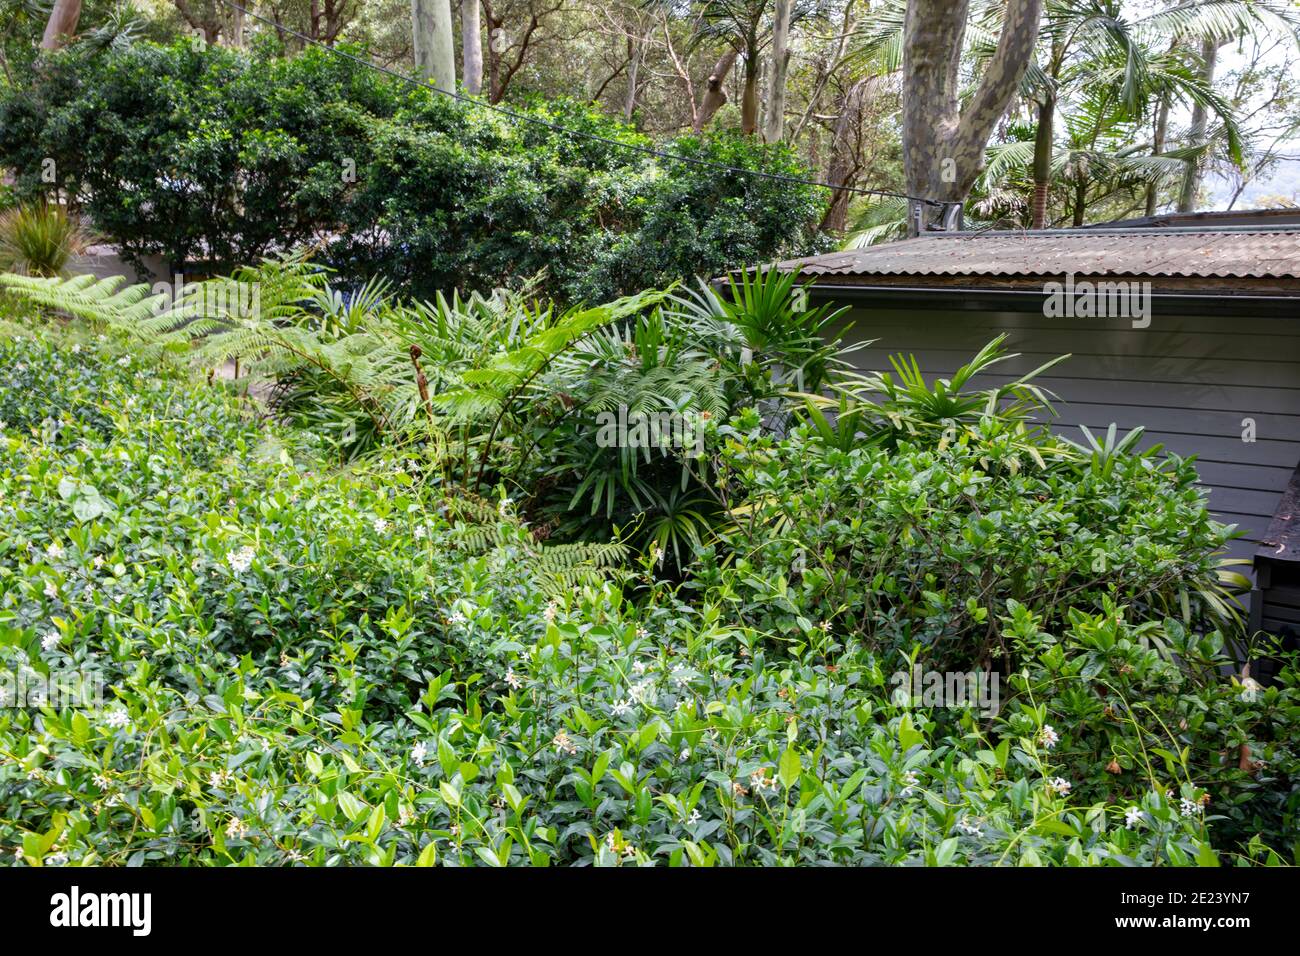 Australian green garden at a private home in Sydney Northern beaches,Clareville,Australia with Trachelospermum jasminoides jasmine growing Stock Photo